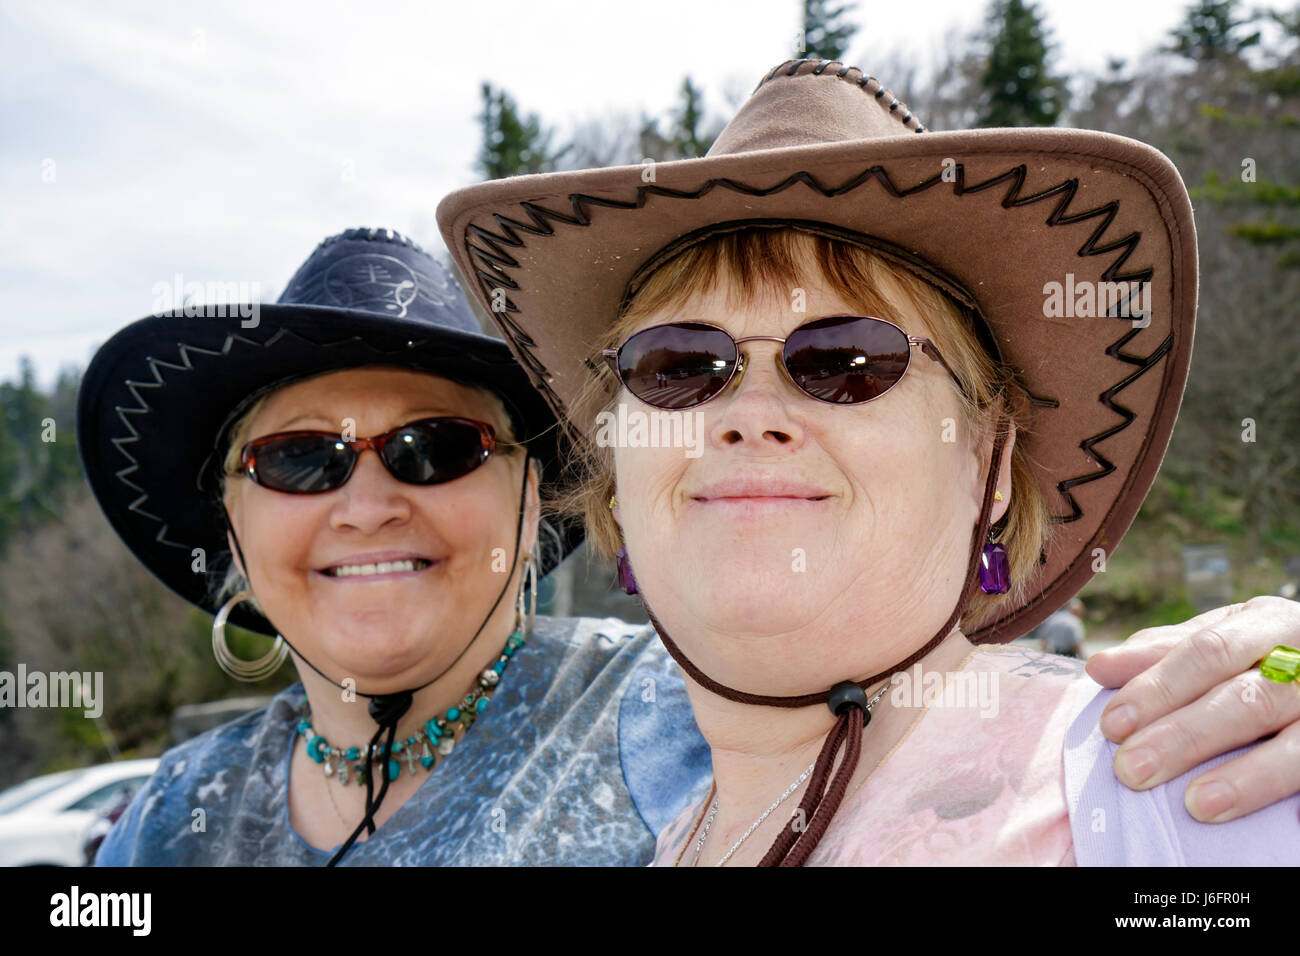 Tennessee Great Smoky Mountains National Park, New Found Gap, adultos mujeres mujeres mujeres mujeres mujeres, mujeres, amigos, sombreros, gafas de sol, vestido por igual, visitantes tra Foto de stock